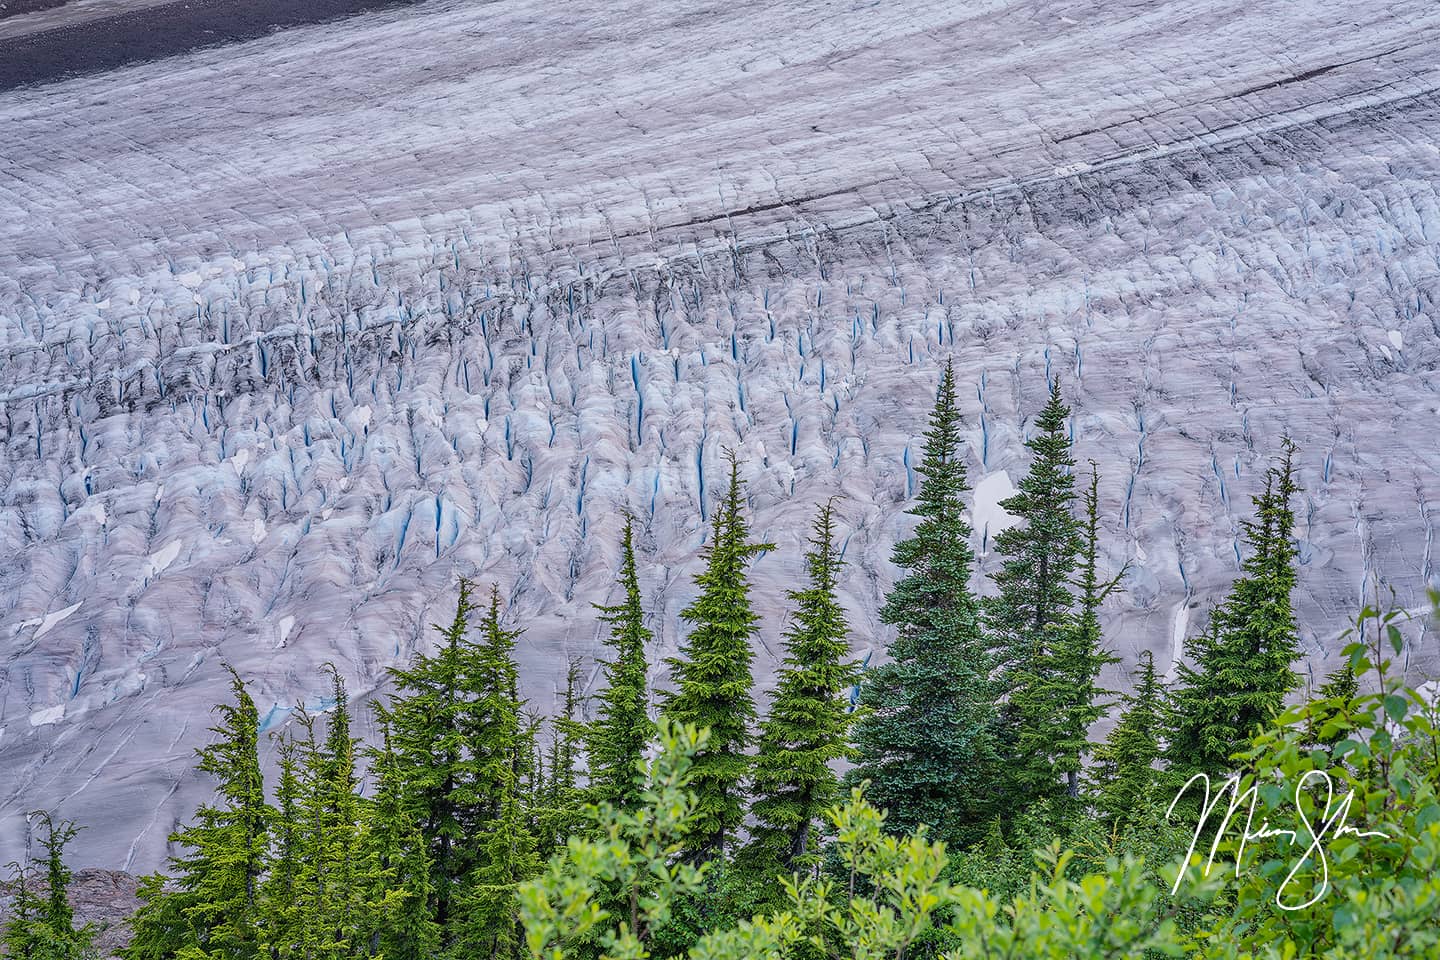 Salmon Glacier Closeup - Stewart, British Columbia, Canada